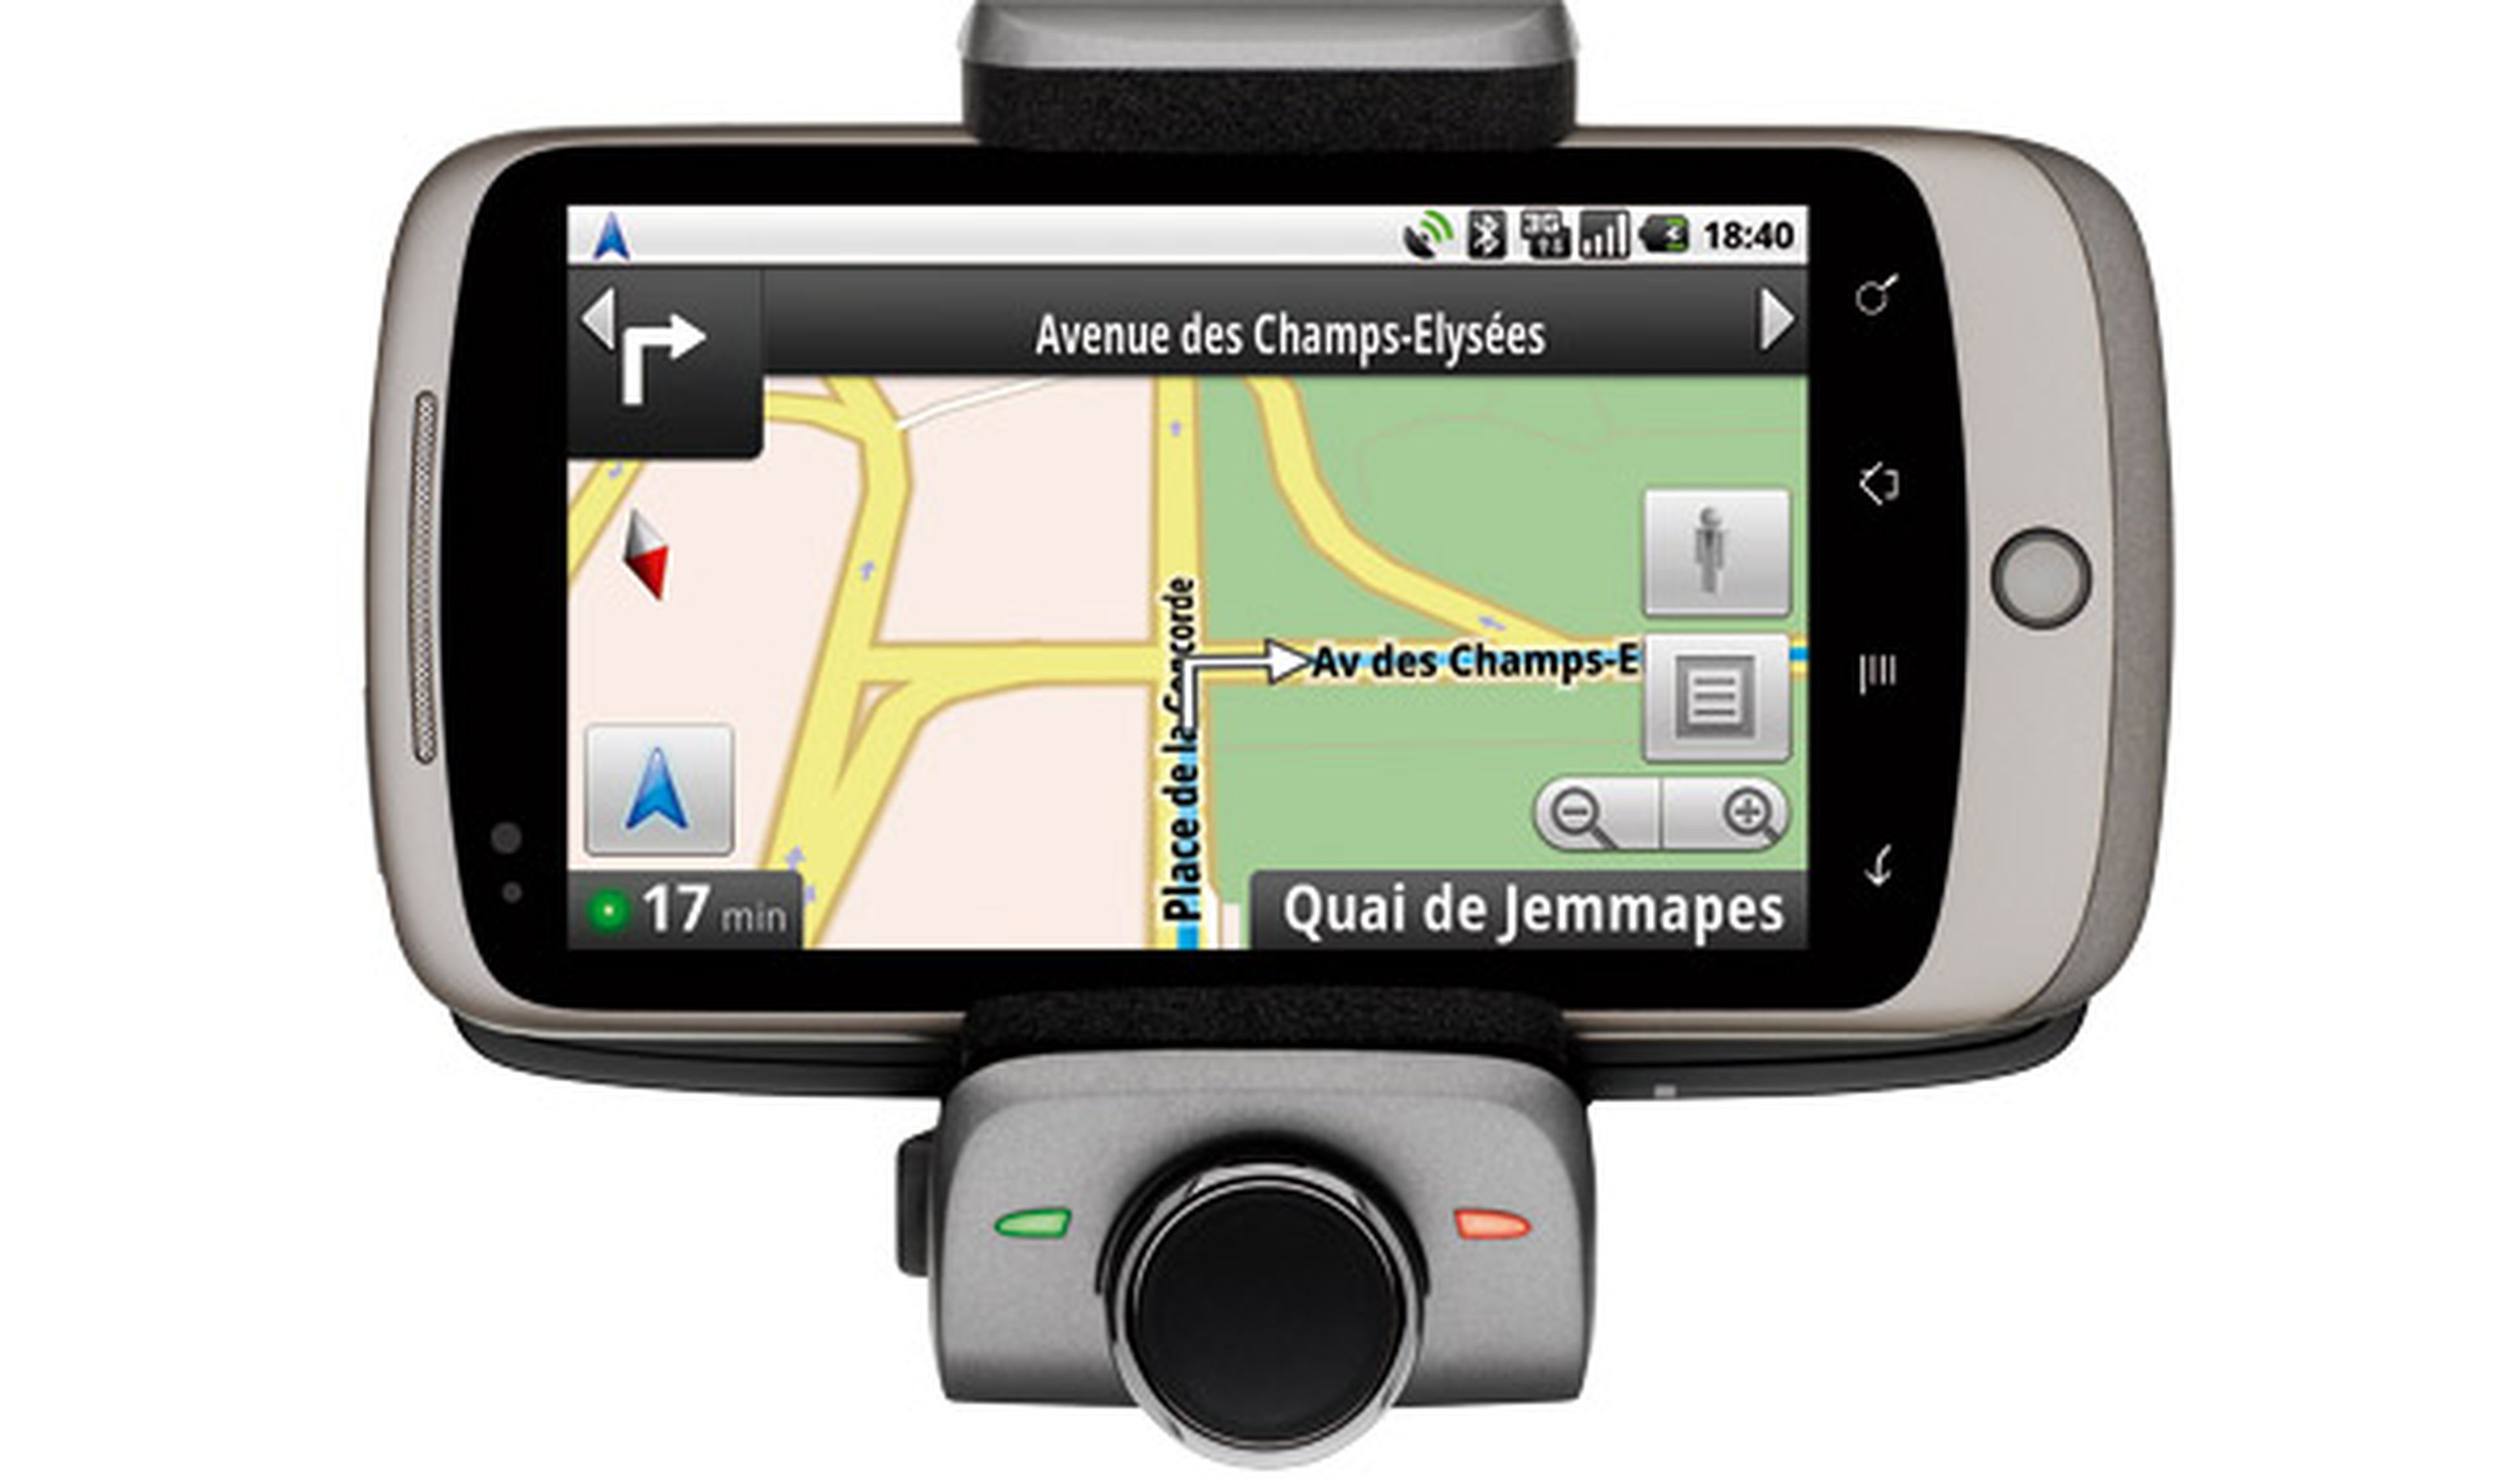 Comparativa de navegadores GPS de móvil para tu coche